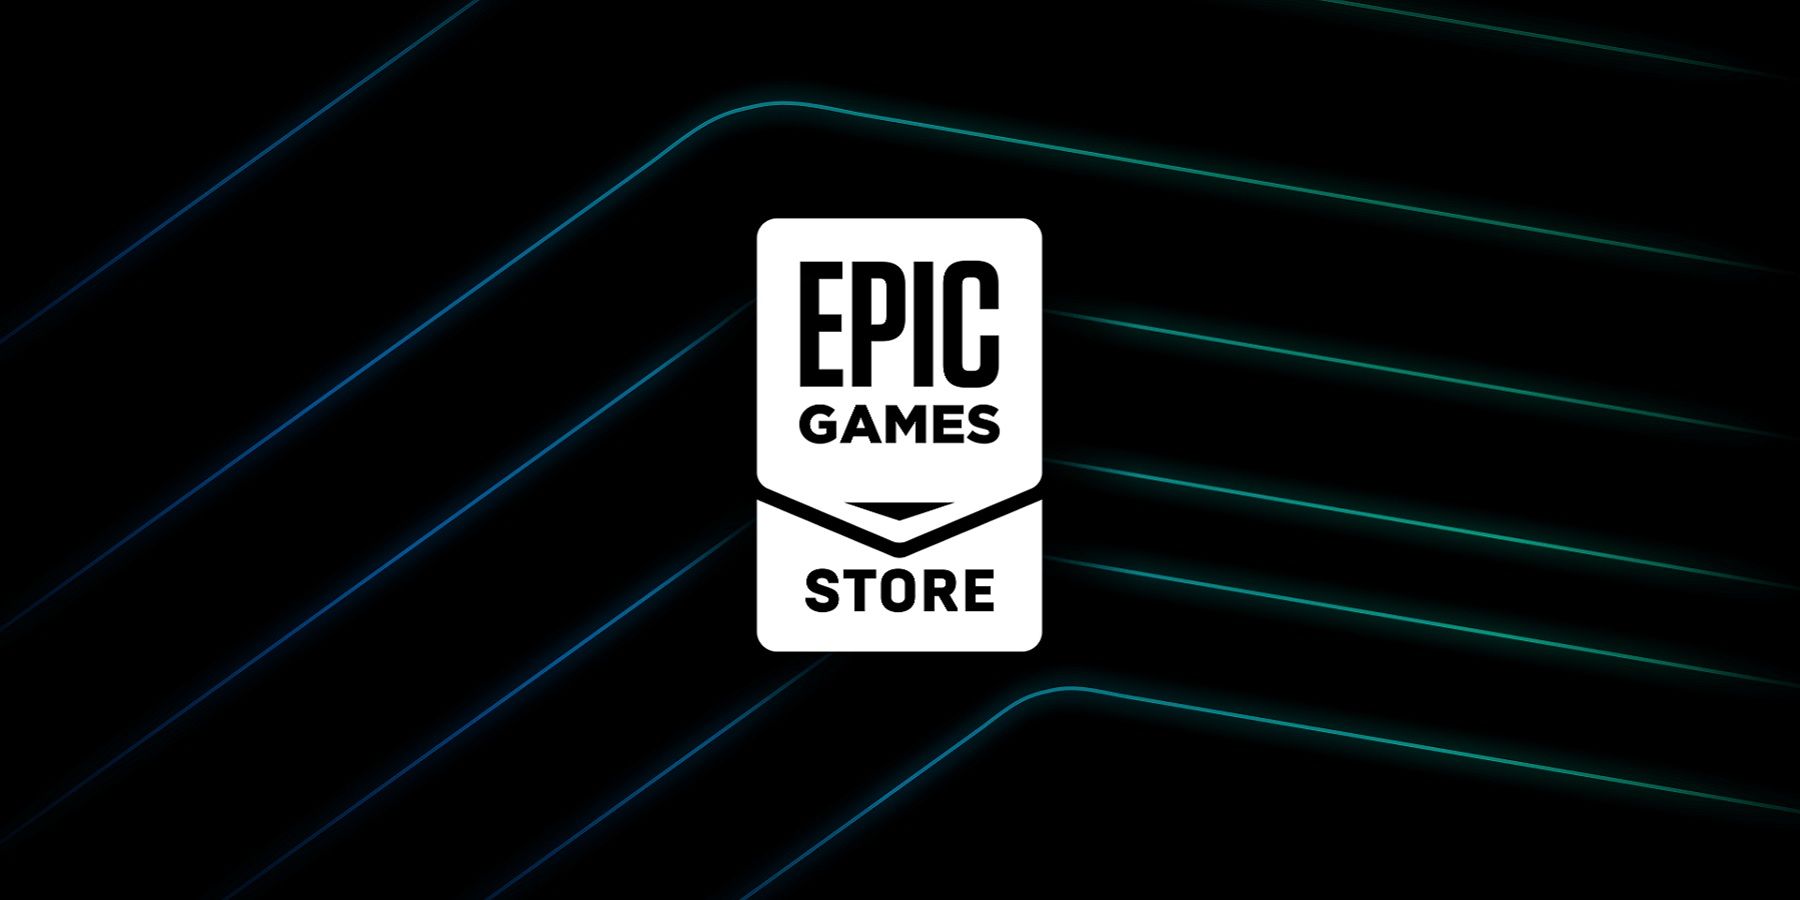 epic games store logo black background